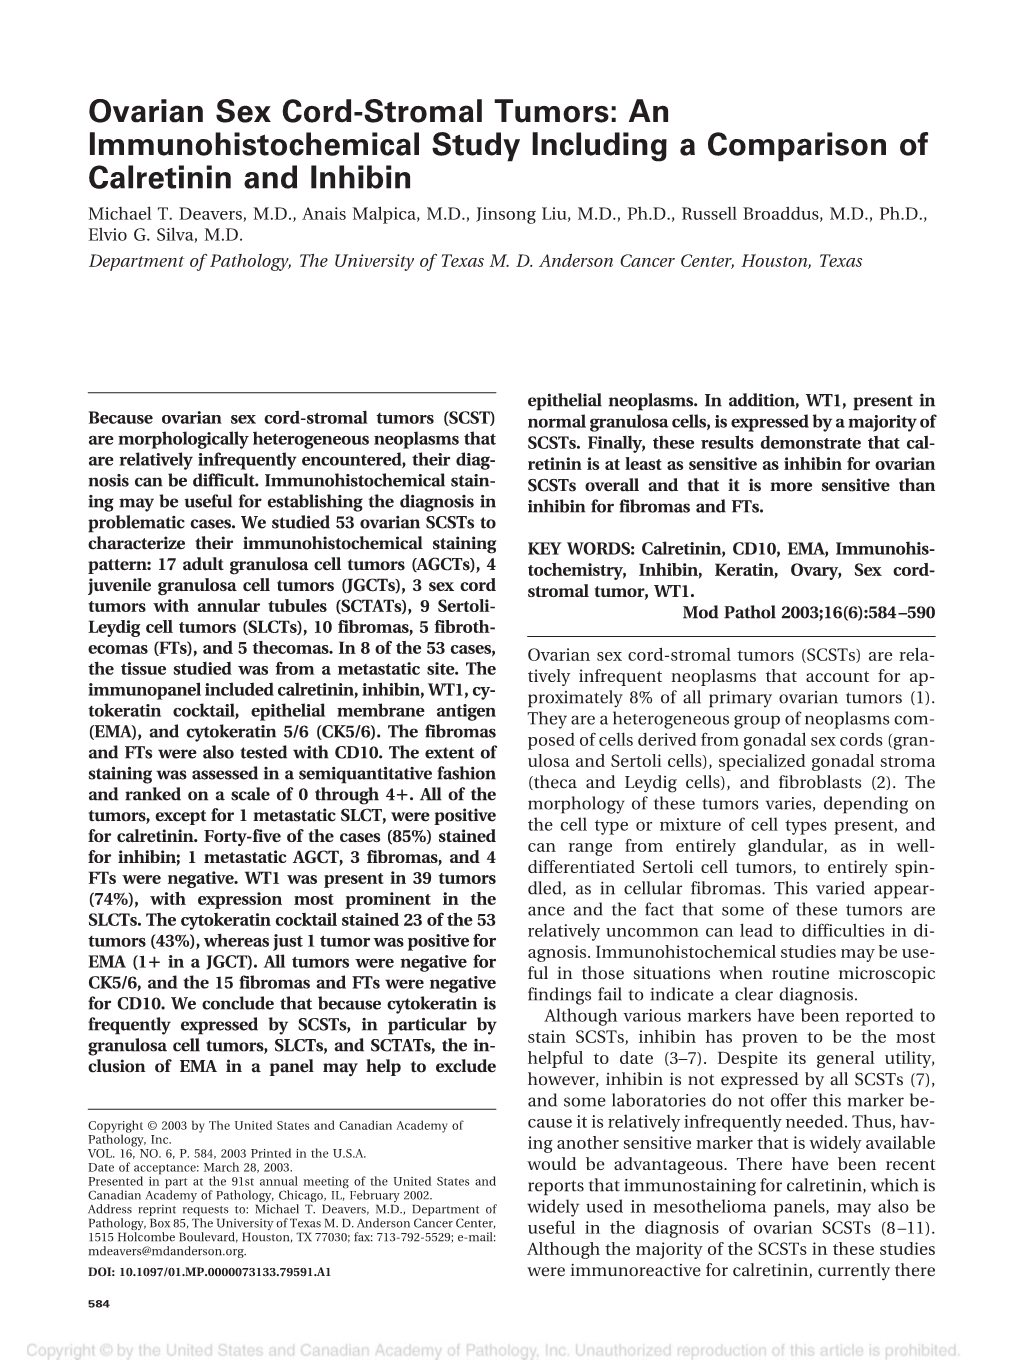 Ovarian Sex Cord-Stromal Tumors: an Immunohistochemical Study Including a Comparison of Calretinin and Inhibin Michael T